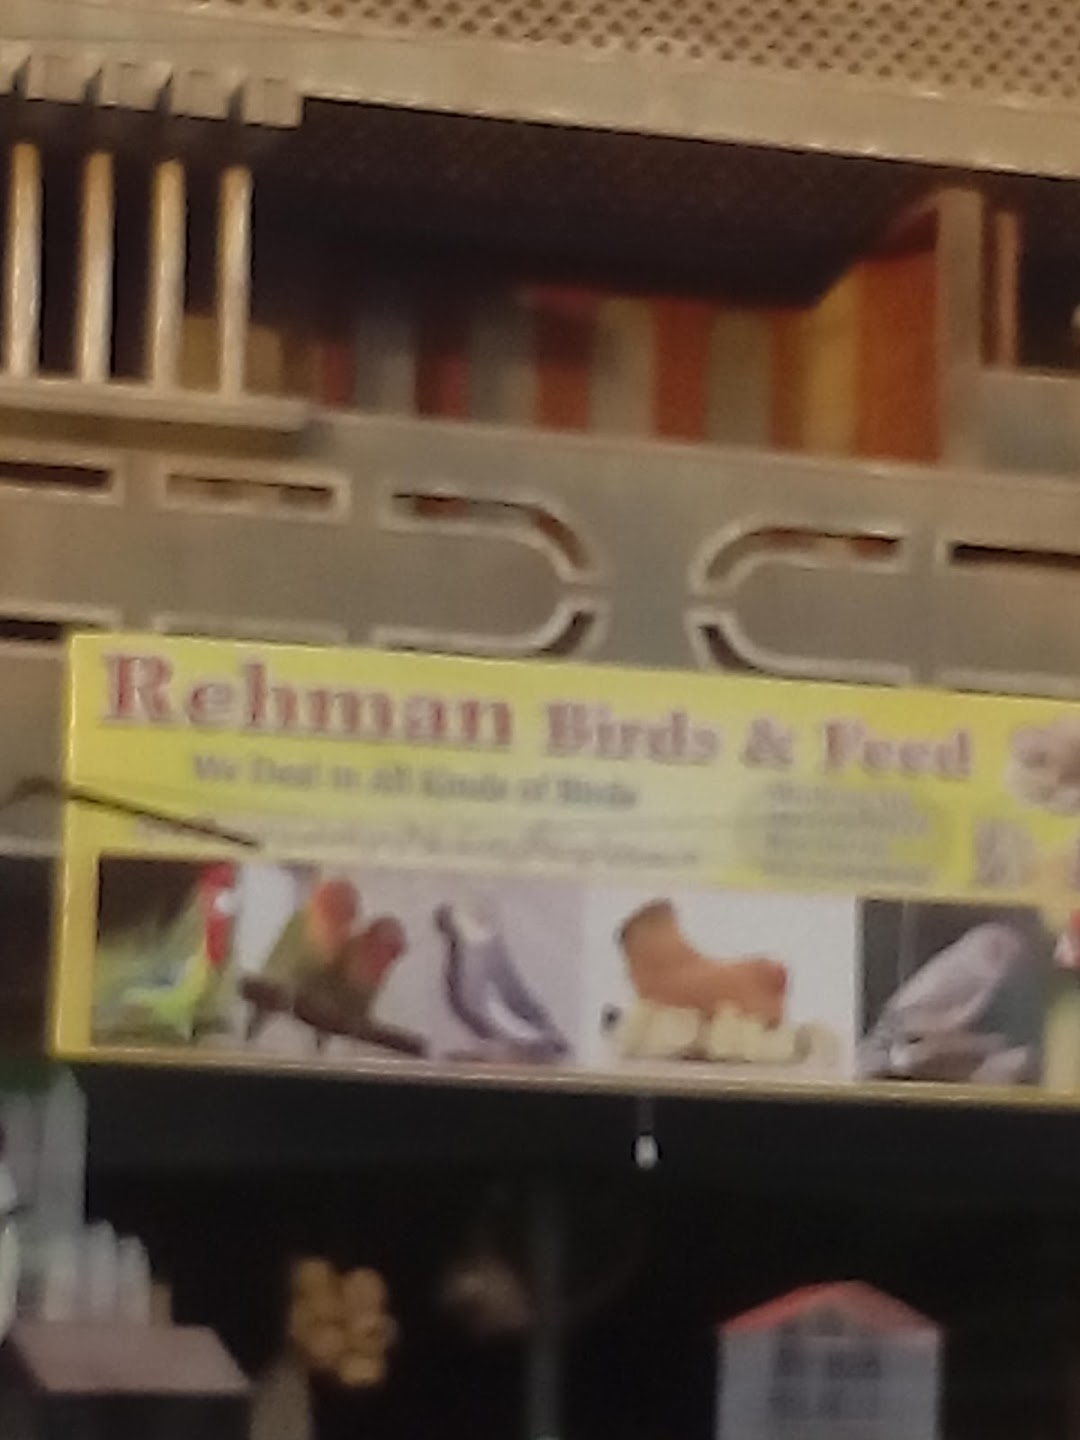 Rehman Birds & Feed